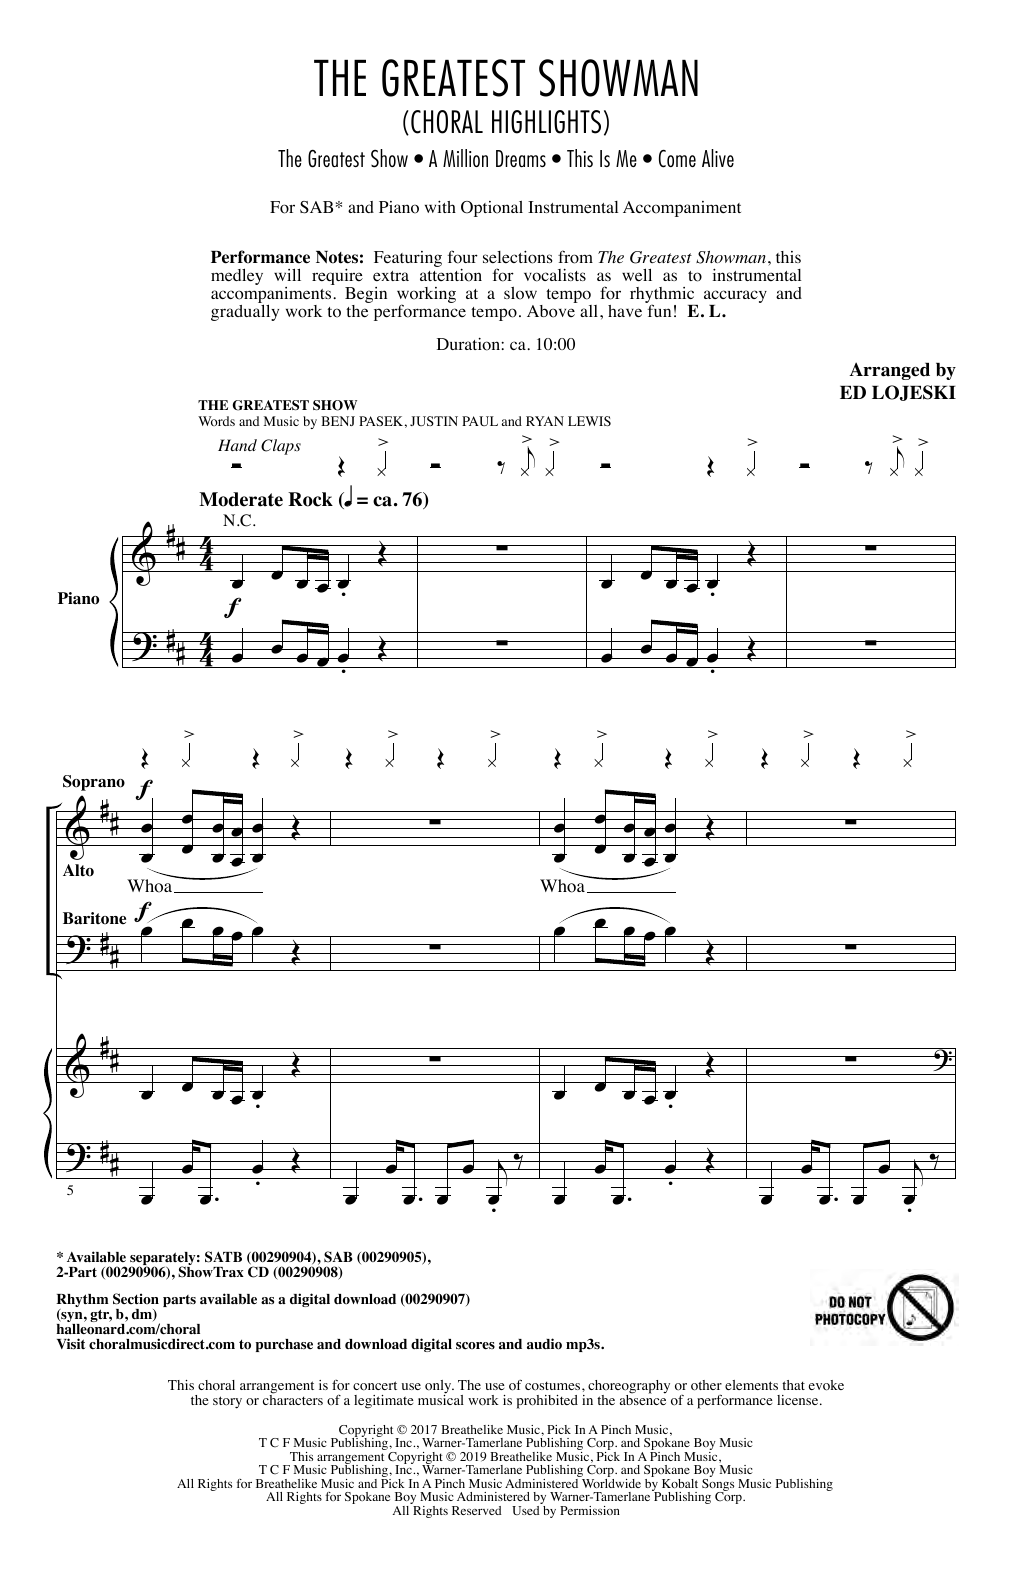 Pasek & Paul The Greatest Showman (Choral Highlights) (arr. Ed Lojeski) sheet music notes and chords arranged for SAB Choir